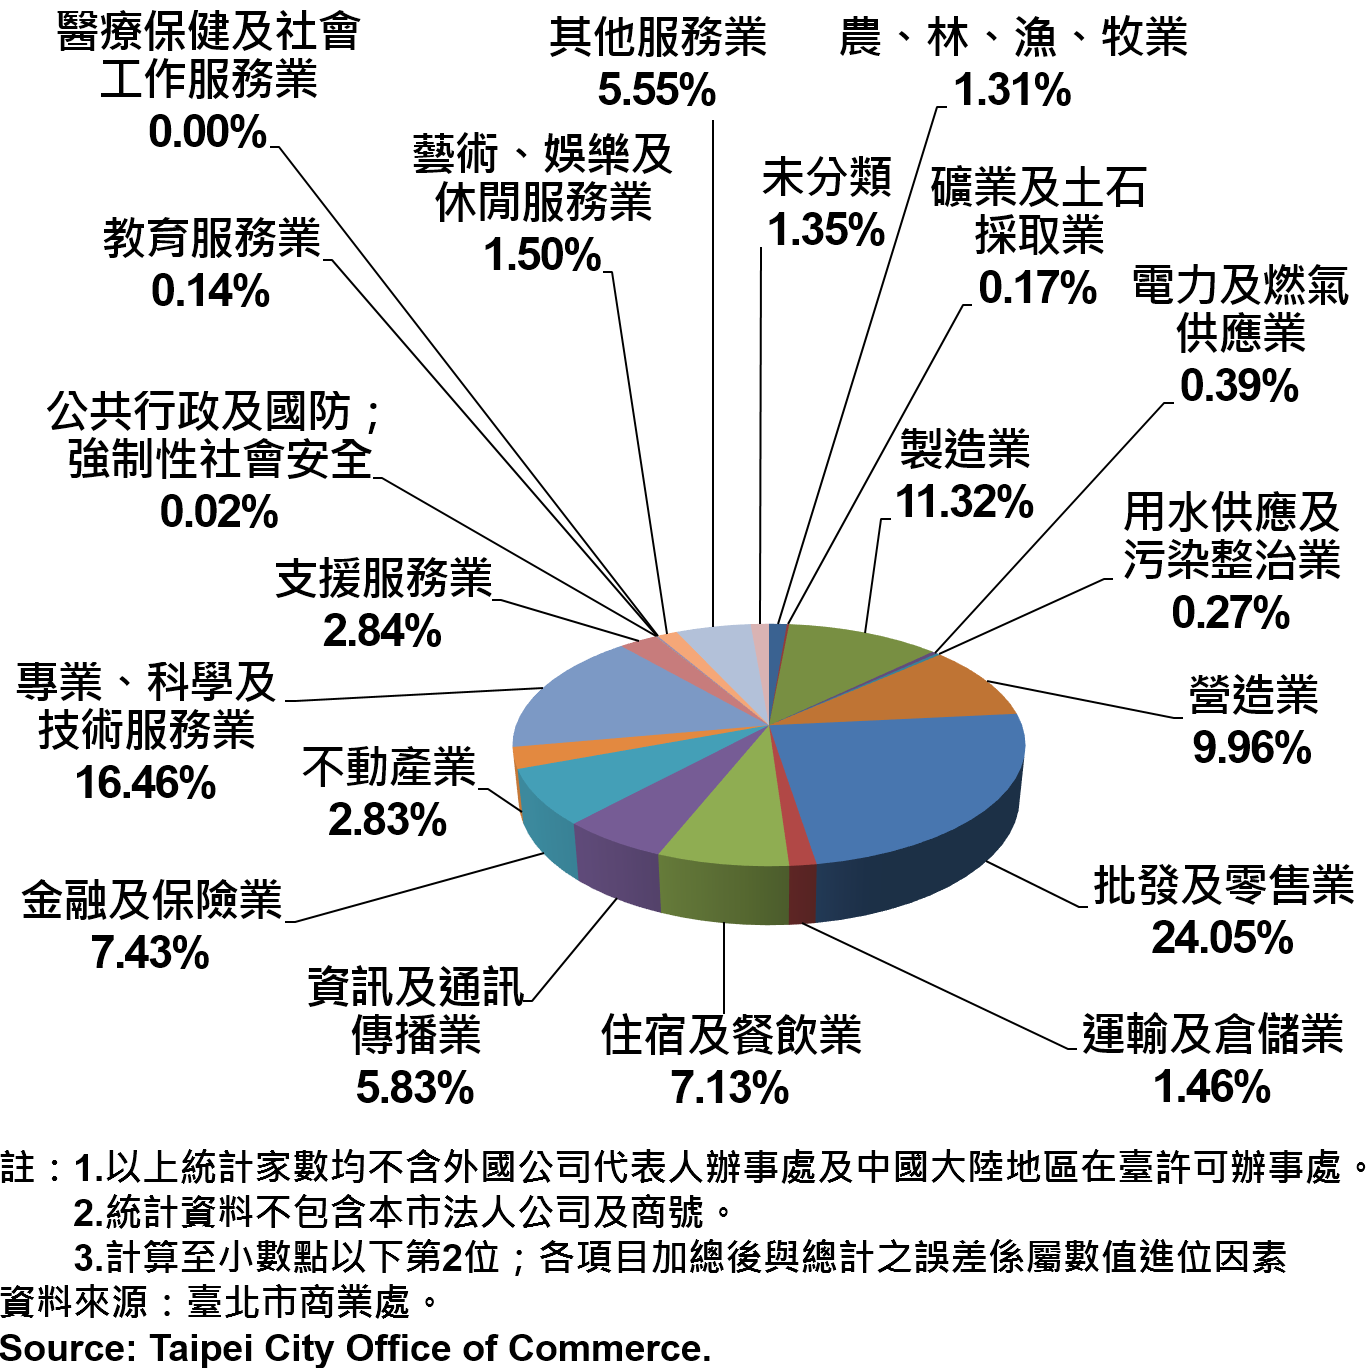 圖19、臺北市公司行號之業別分布情形—依現存家數—2017Q3 Newly Registered Companies in Taipei City by Industry - Number of Current—2017Q3